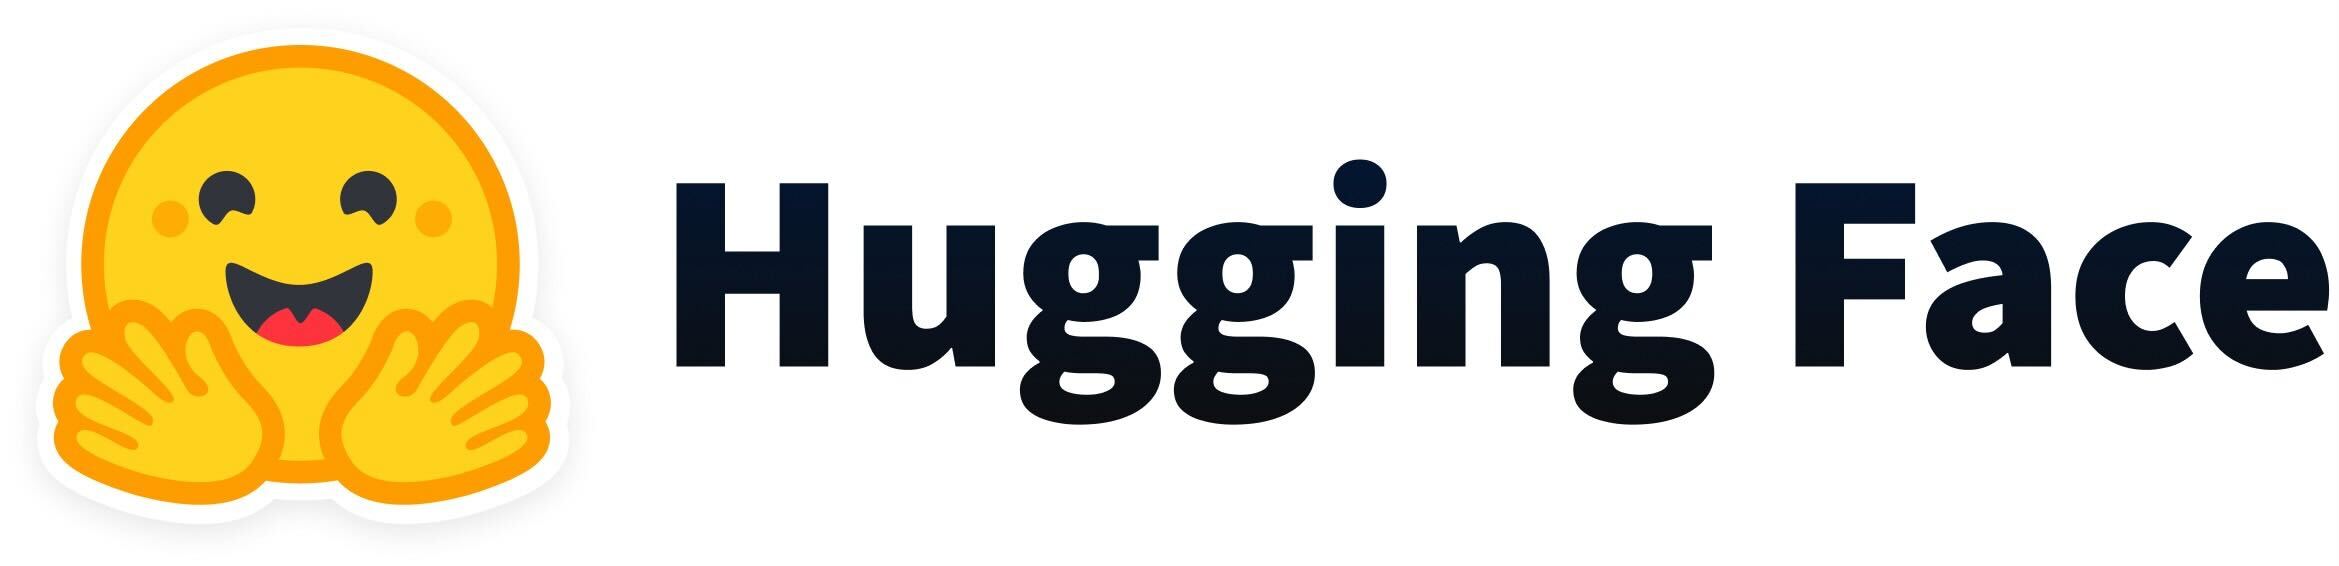 HuggingFace logo